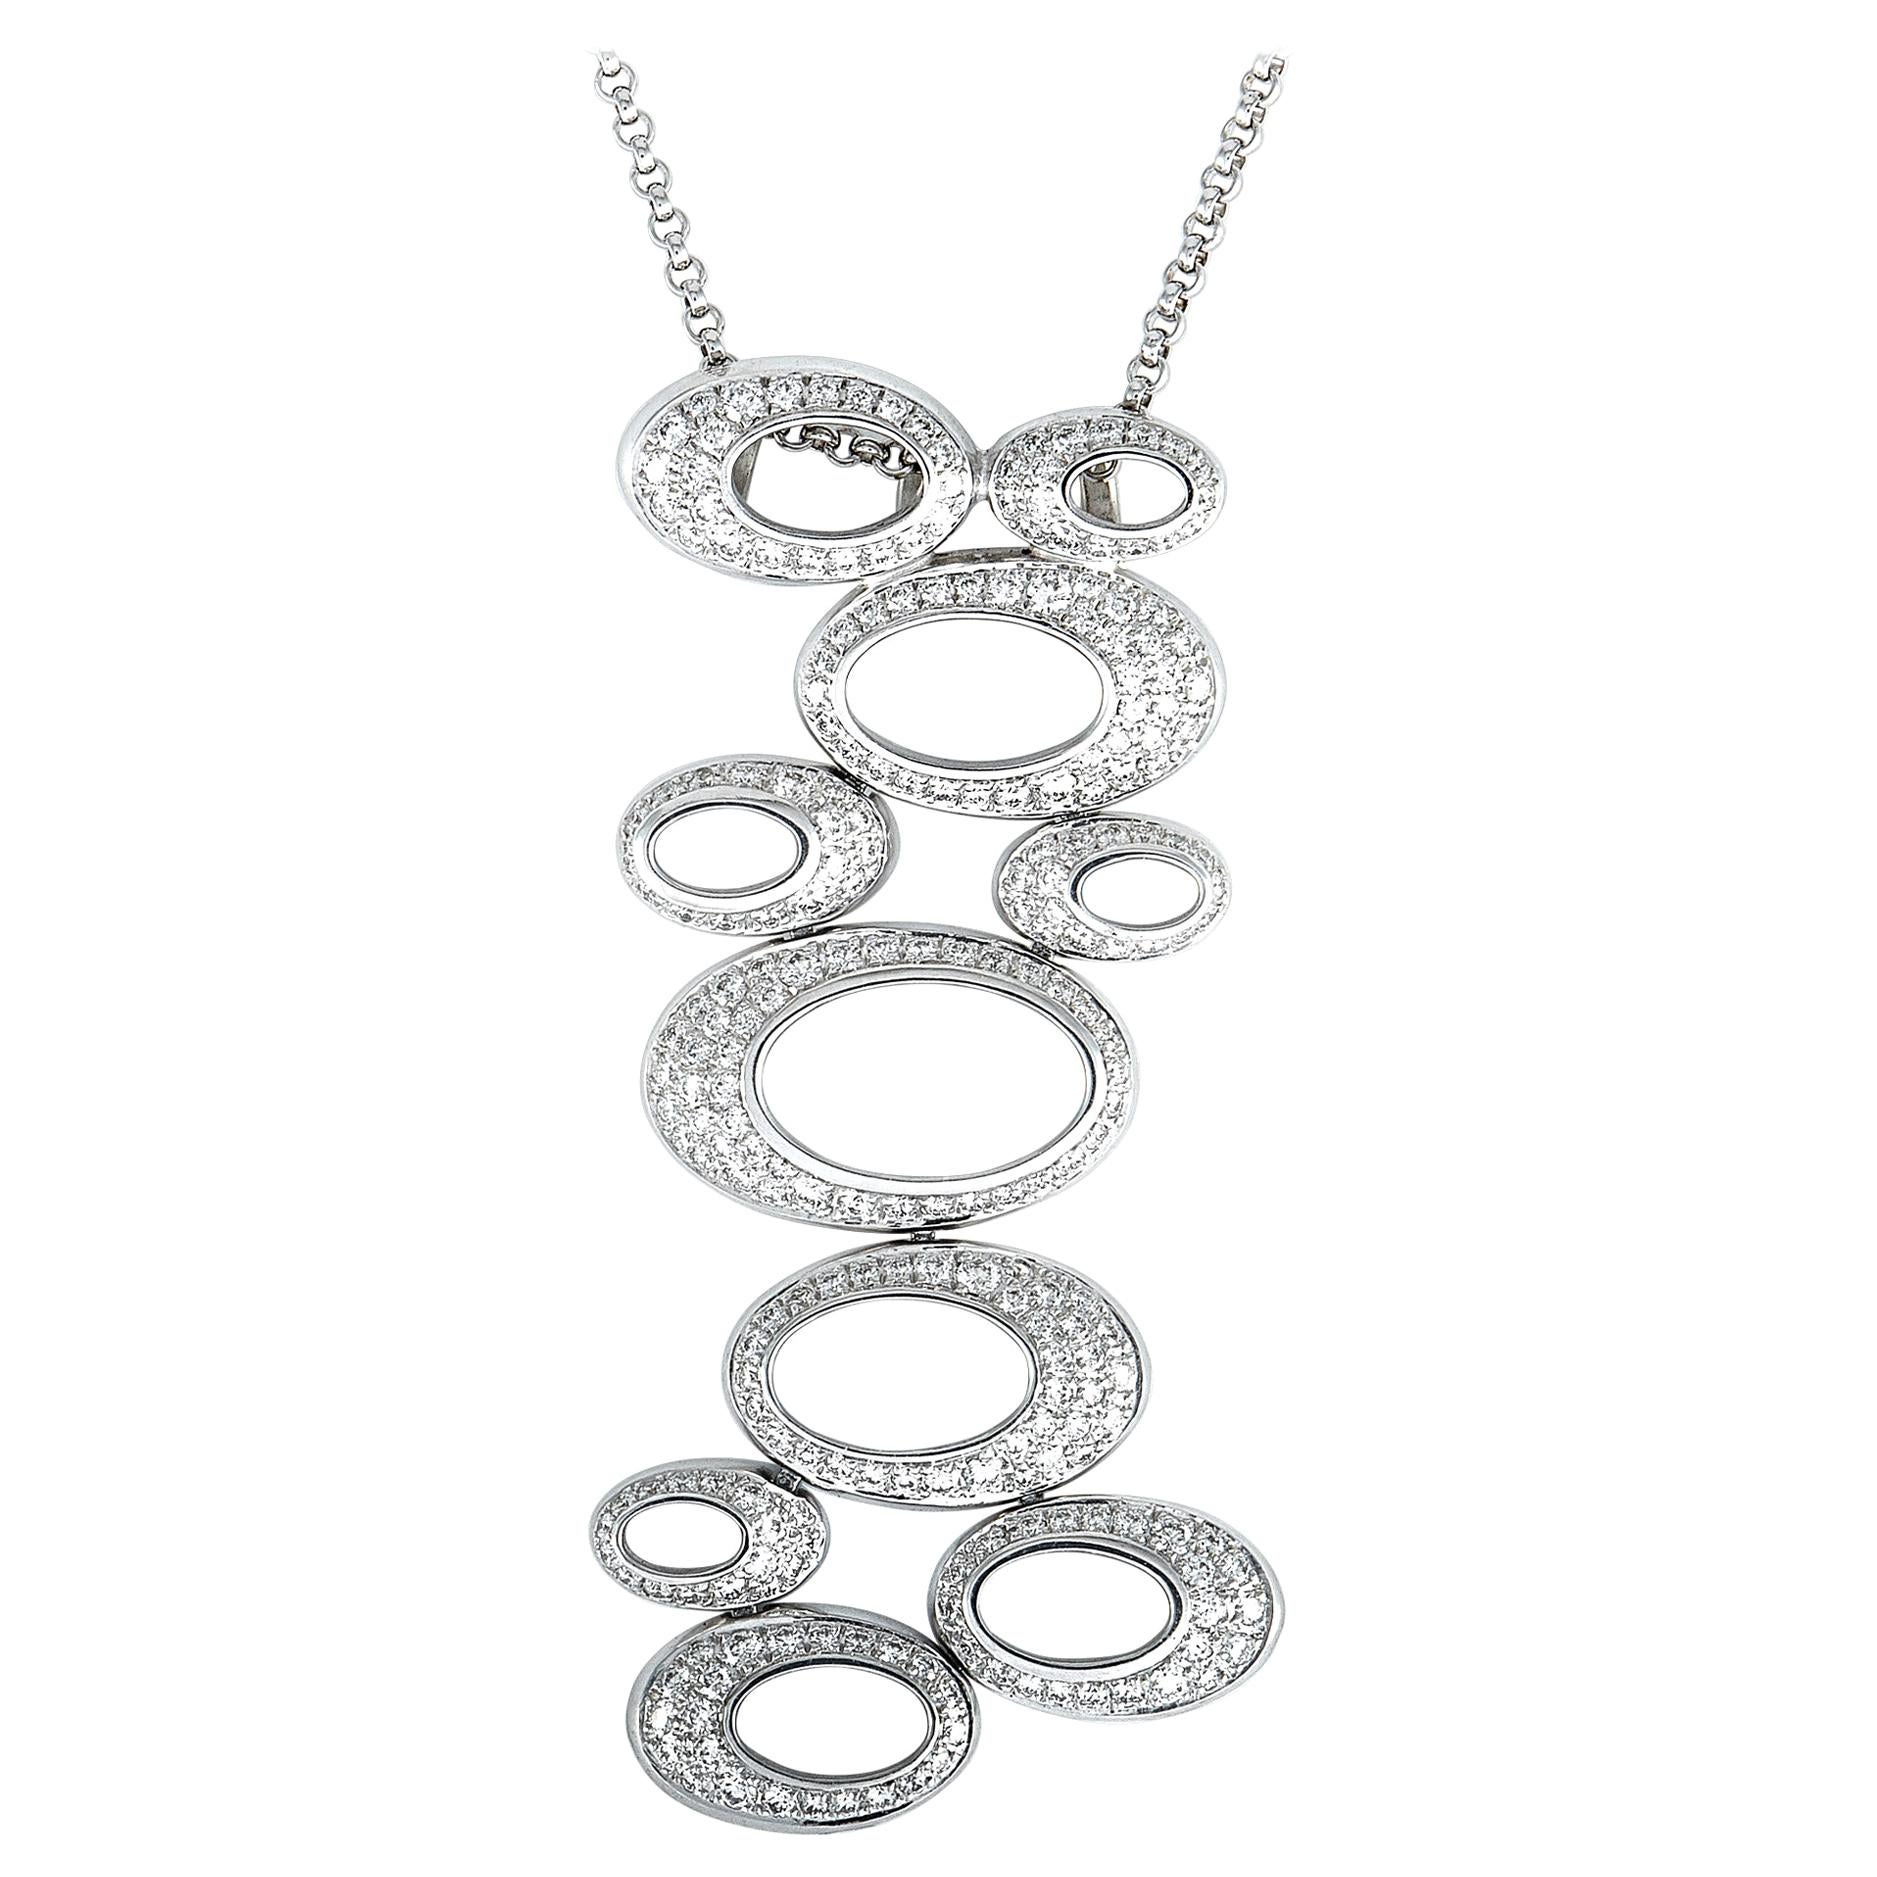 Chopard 18 Karat White Gold Diamond Pave Dangle Pendant Chain Necklace